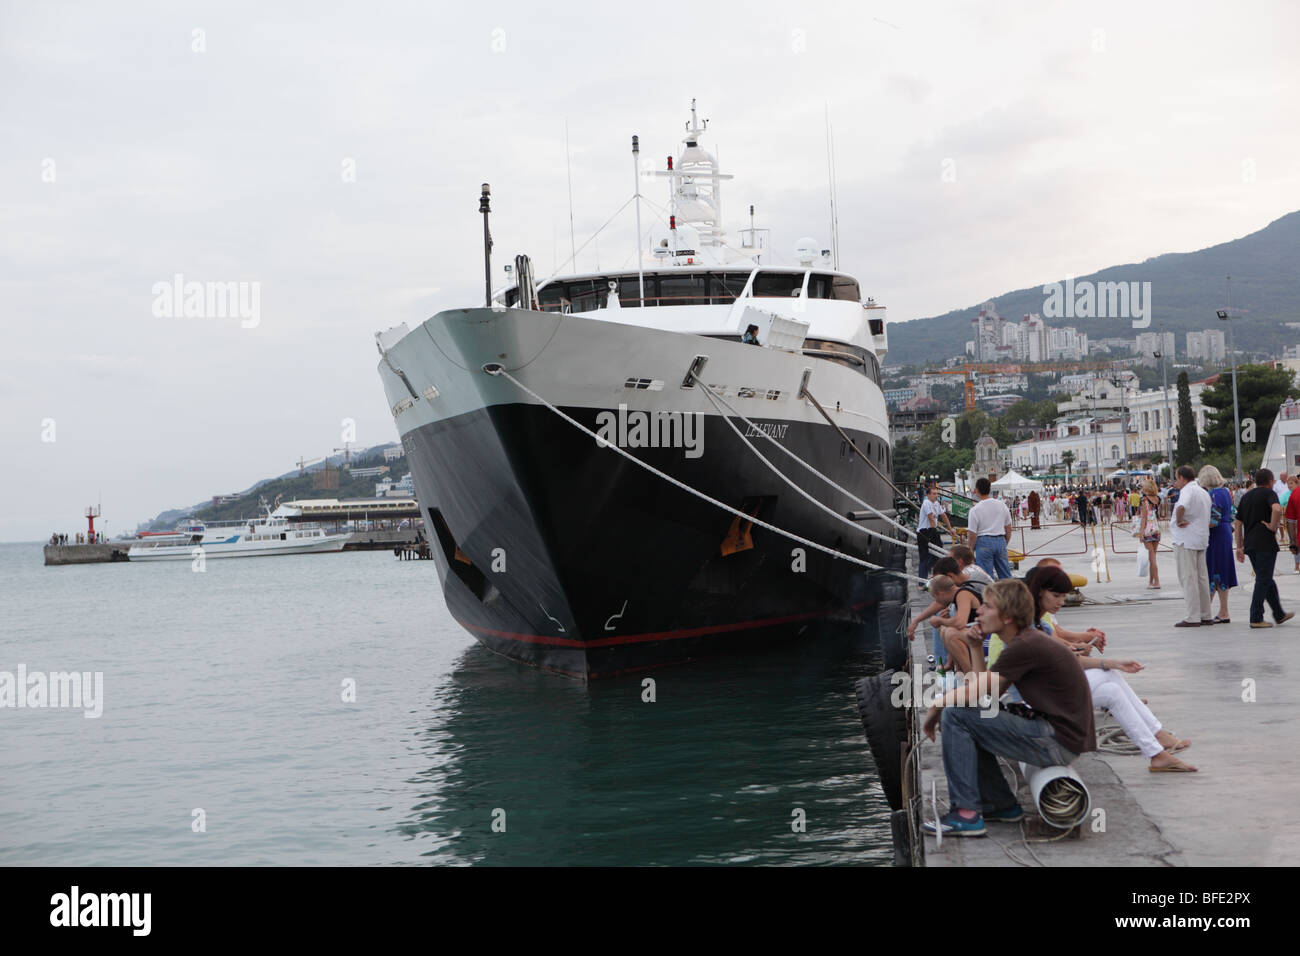 Le Levant Luxury Cruise Liner in Yalta port, Republic of Crimea, Ukraine Stock Photo